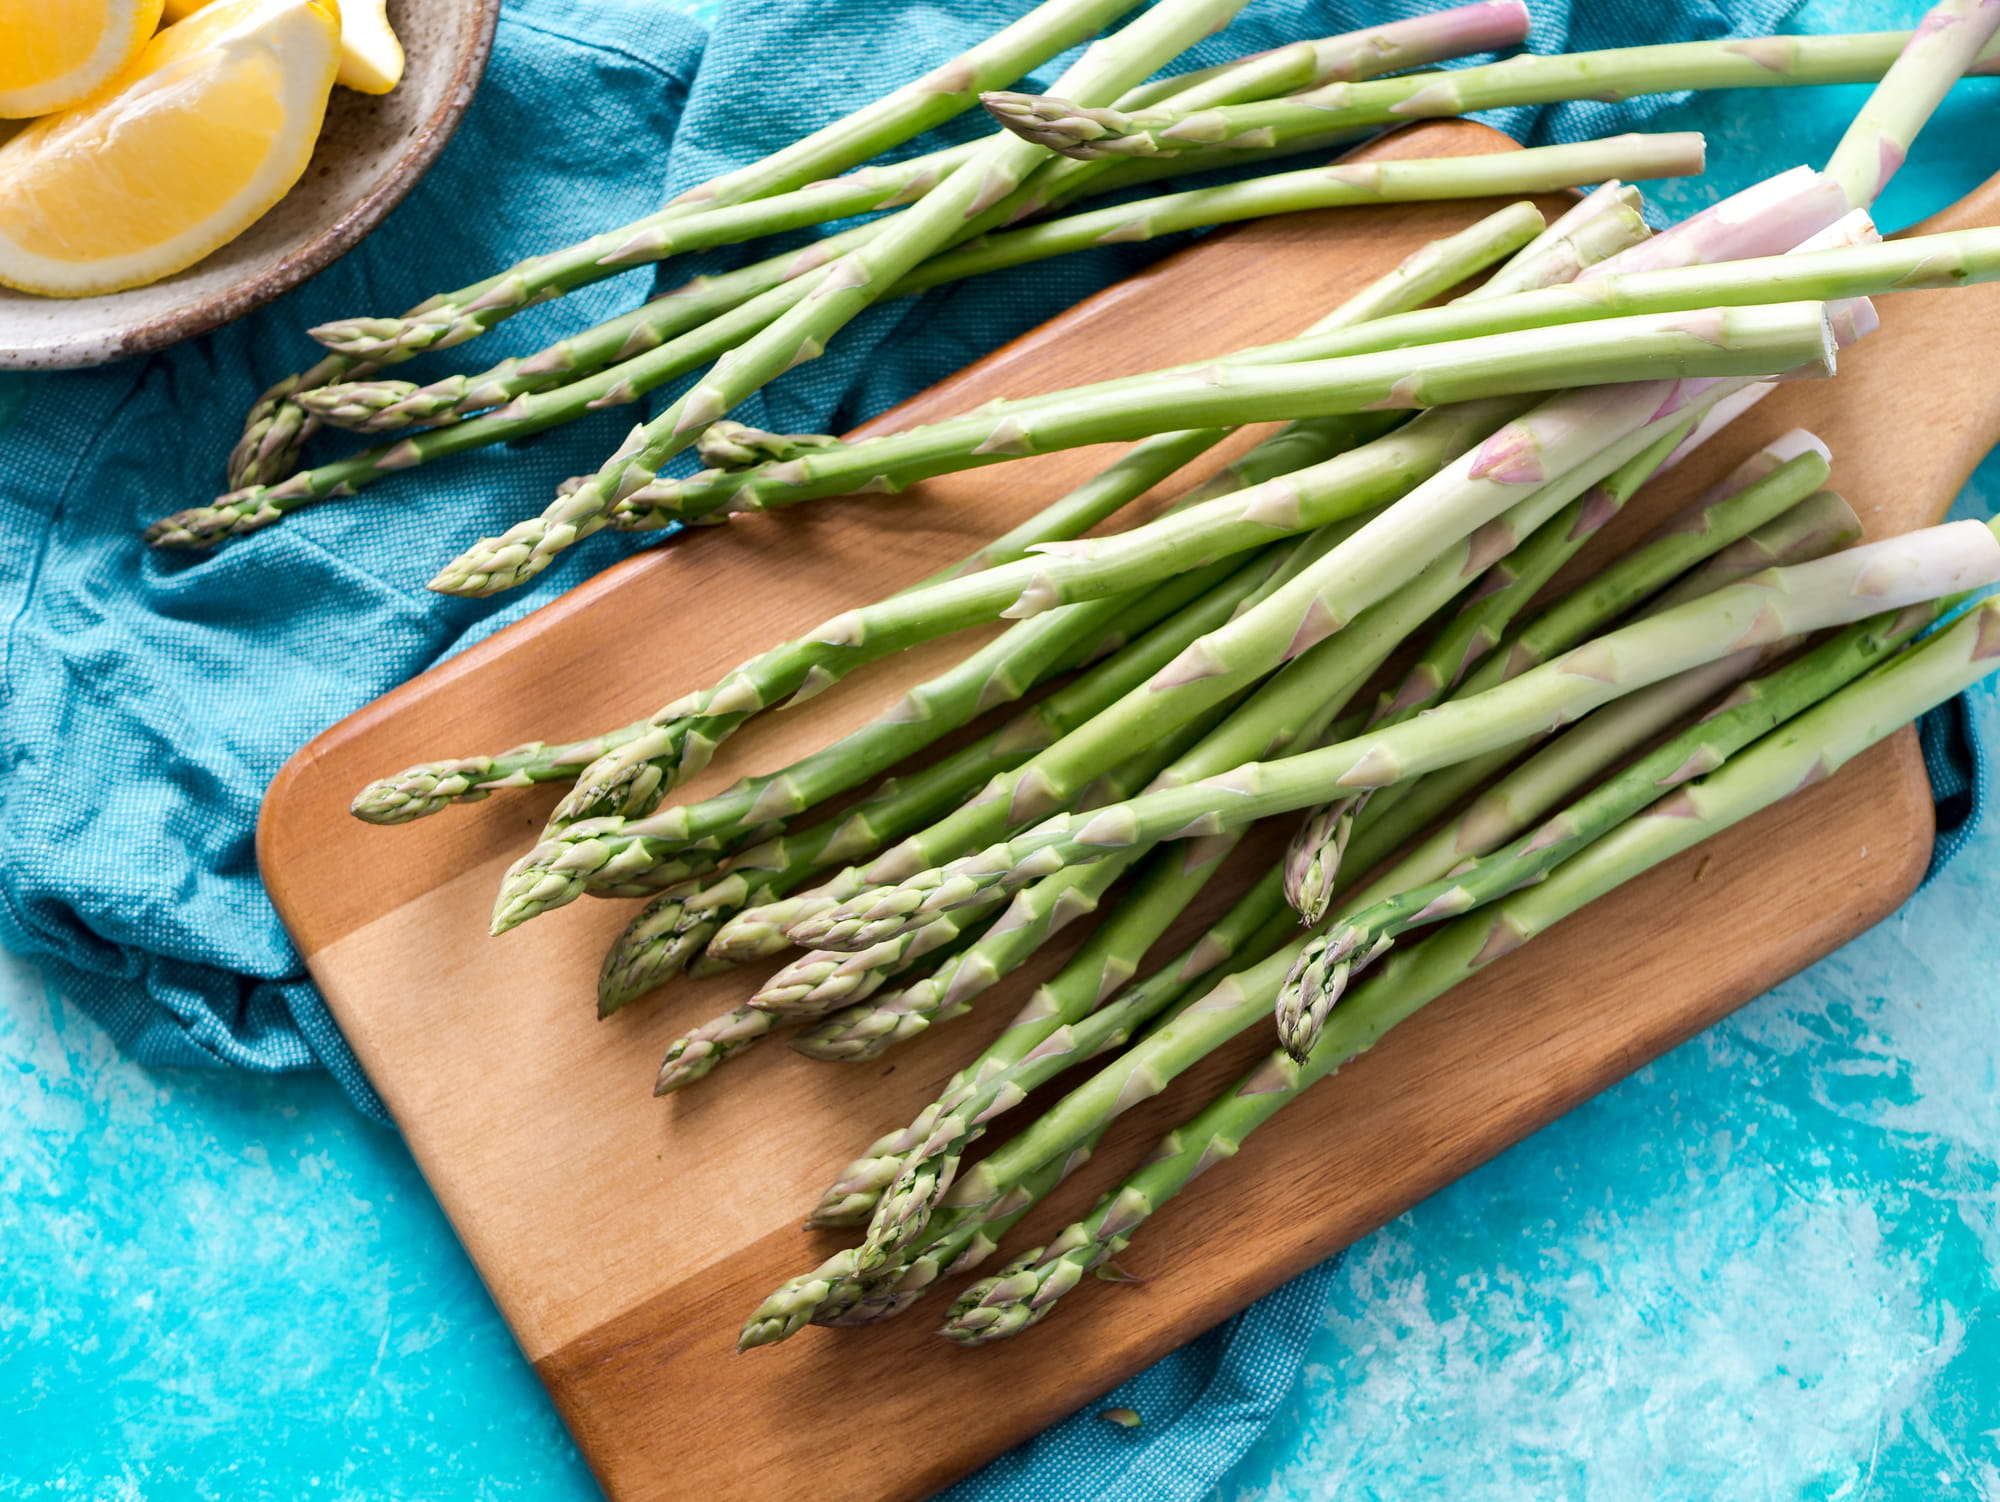 Spring’s star vegetable: asparagus